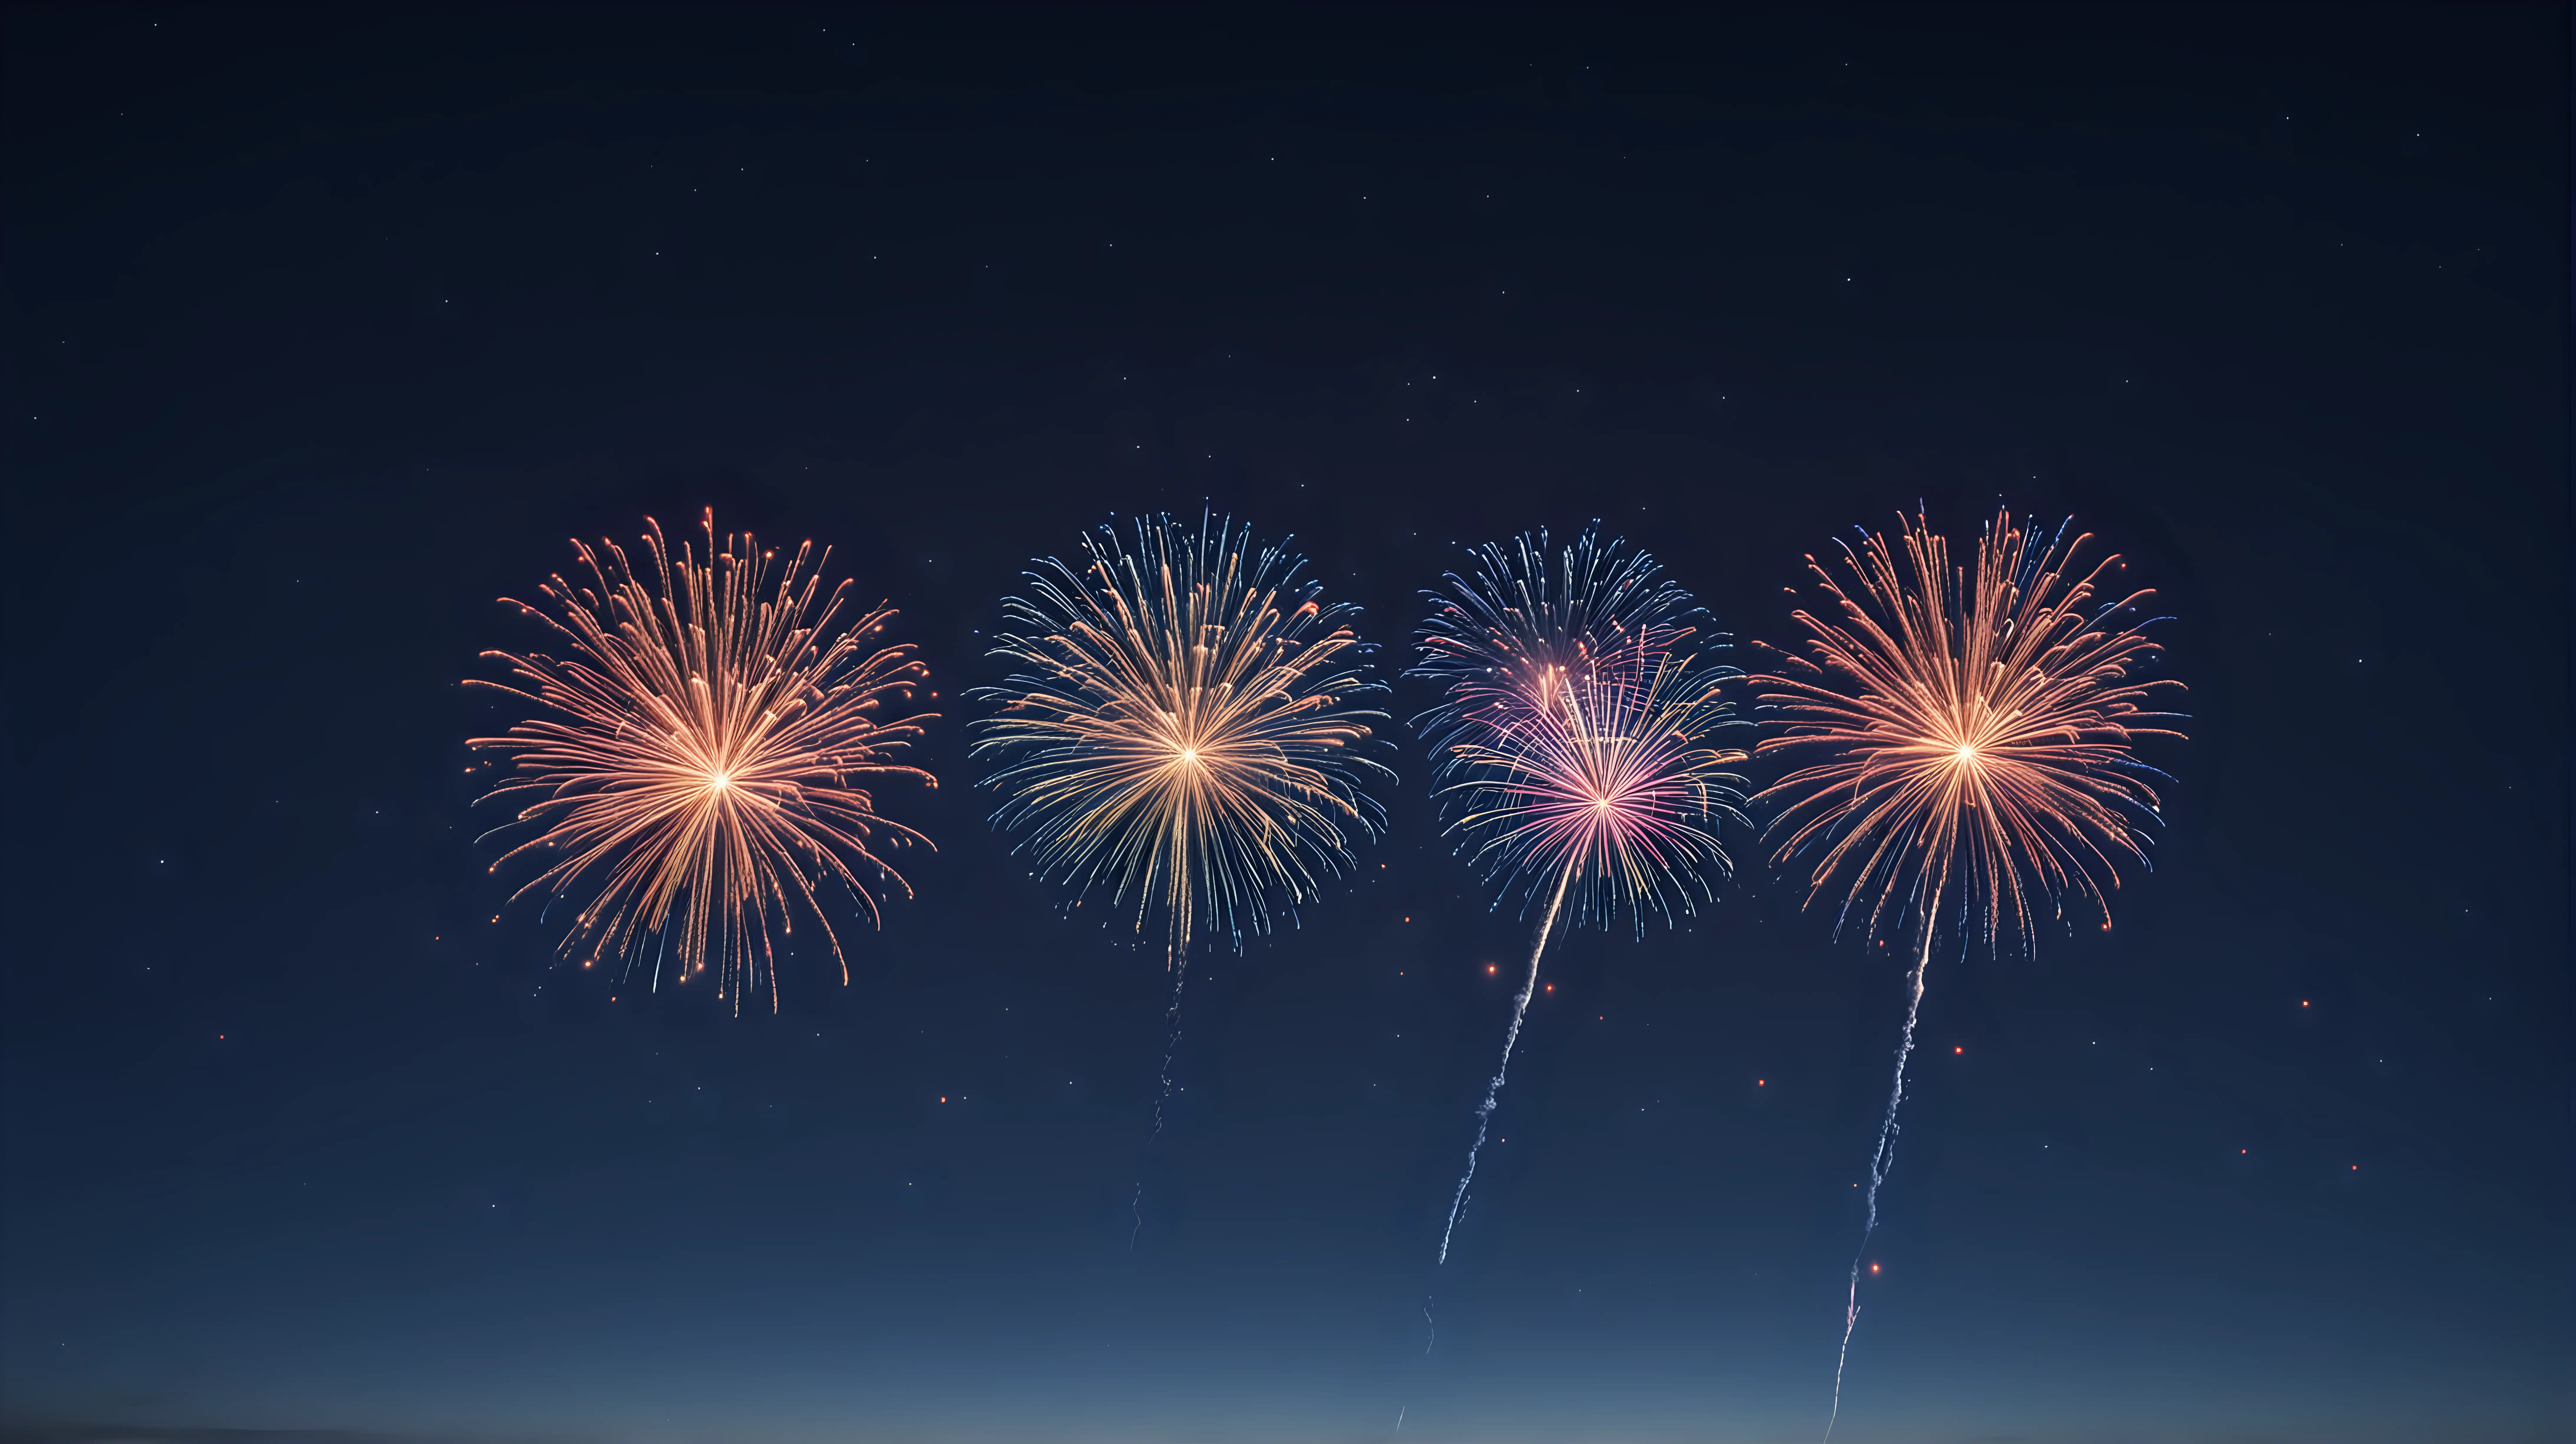 Vibrant Miniature Fireworks Display Against Majestic Night Sky